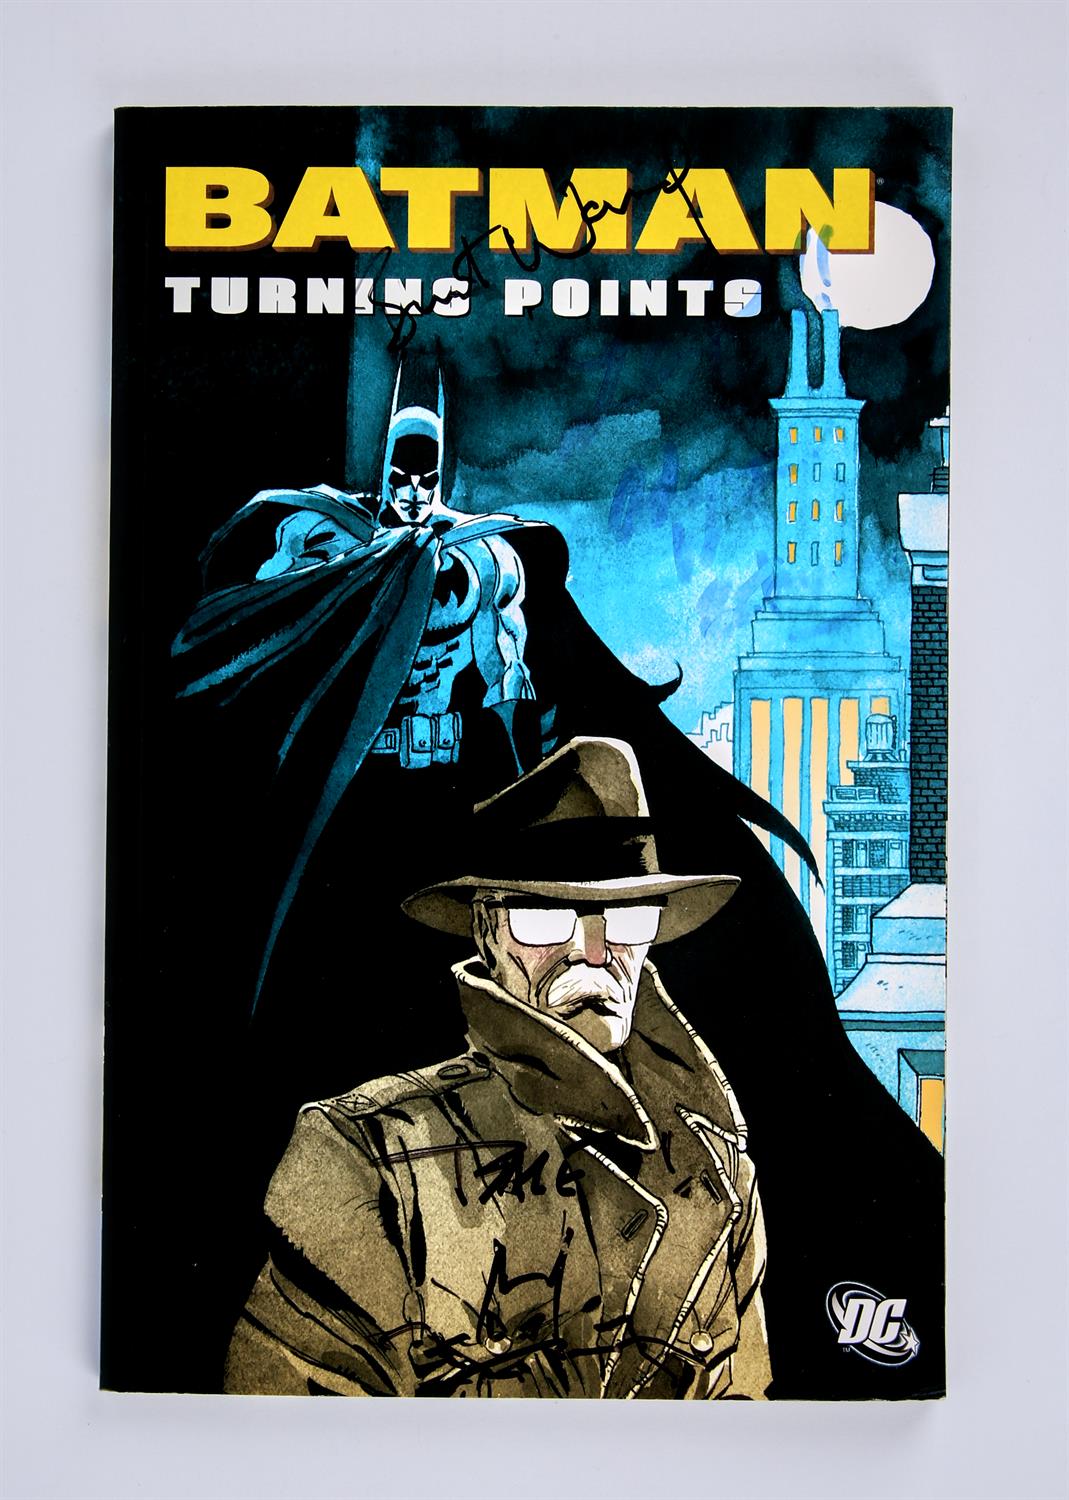 Batman ‘Turning Points’ Graphic Novel Signed by Adam West (Batman) Burt Ward (Robin) and Tim Sale.